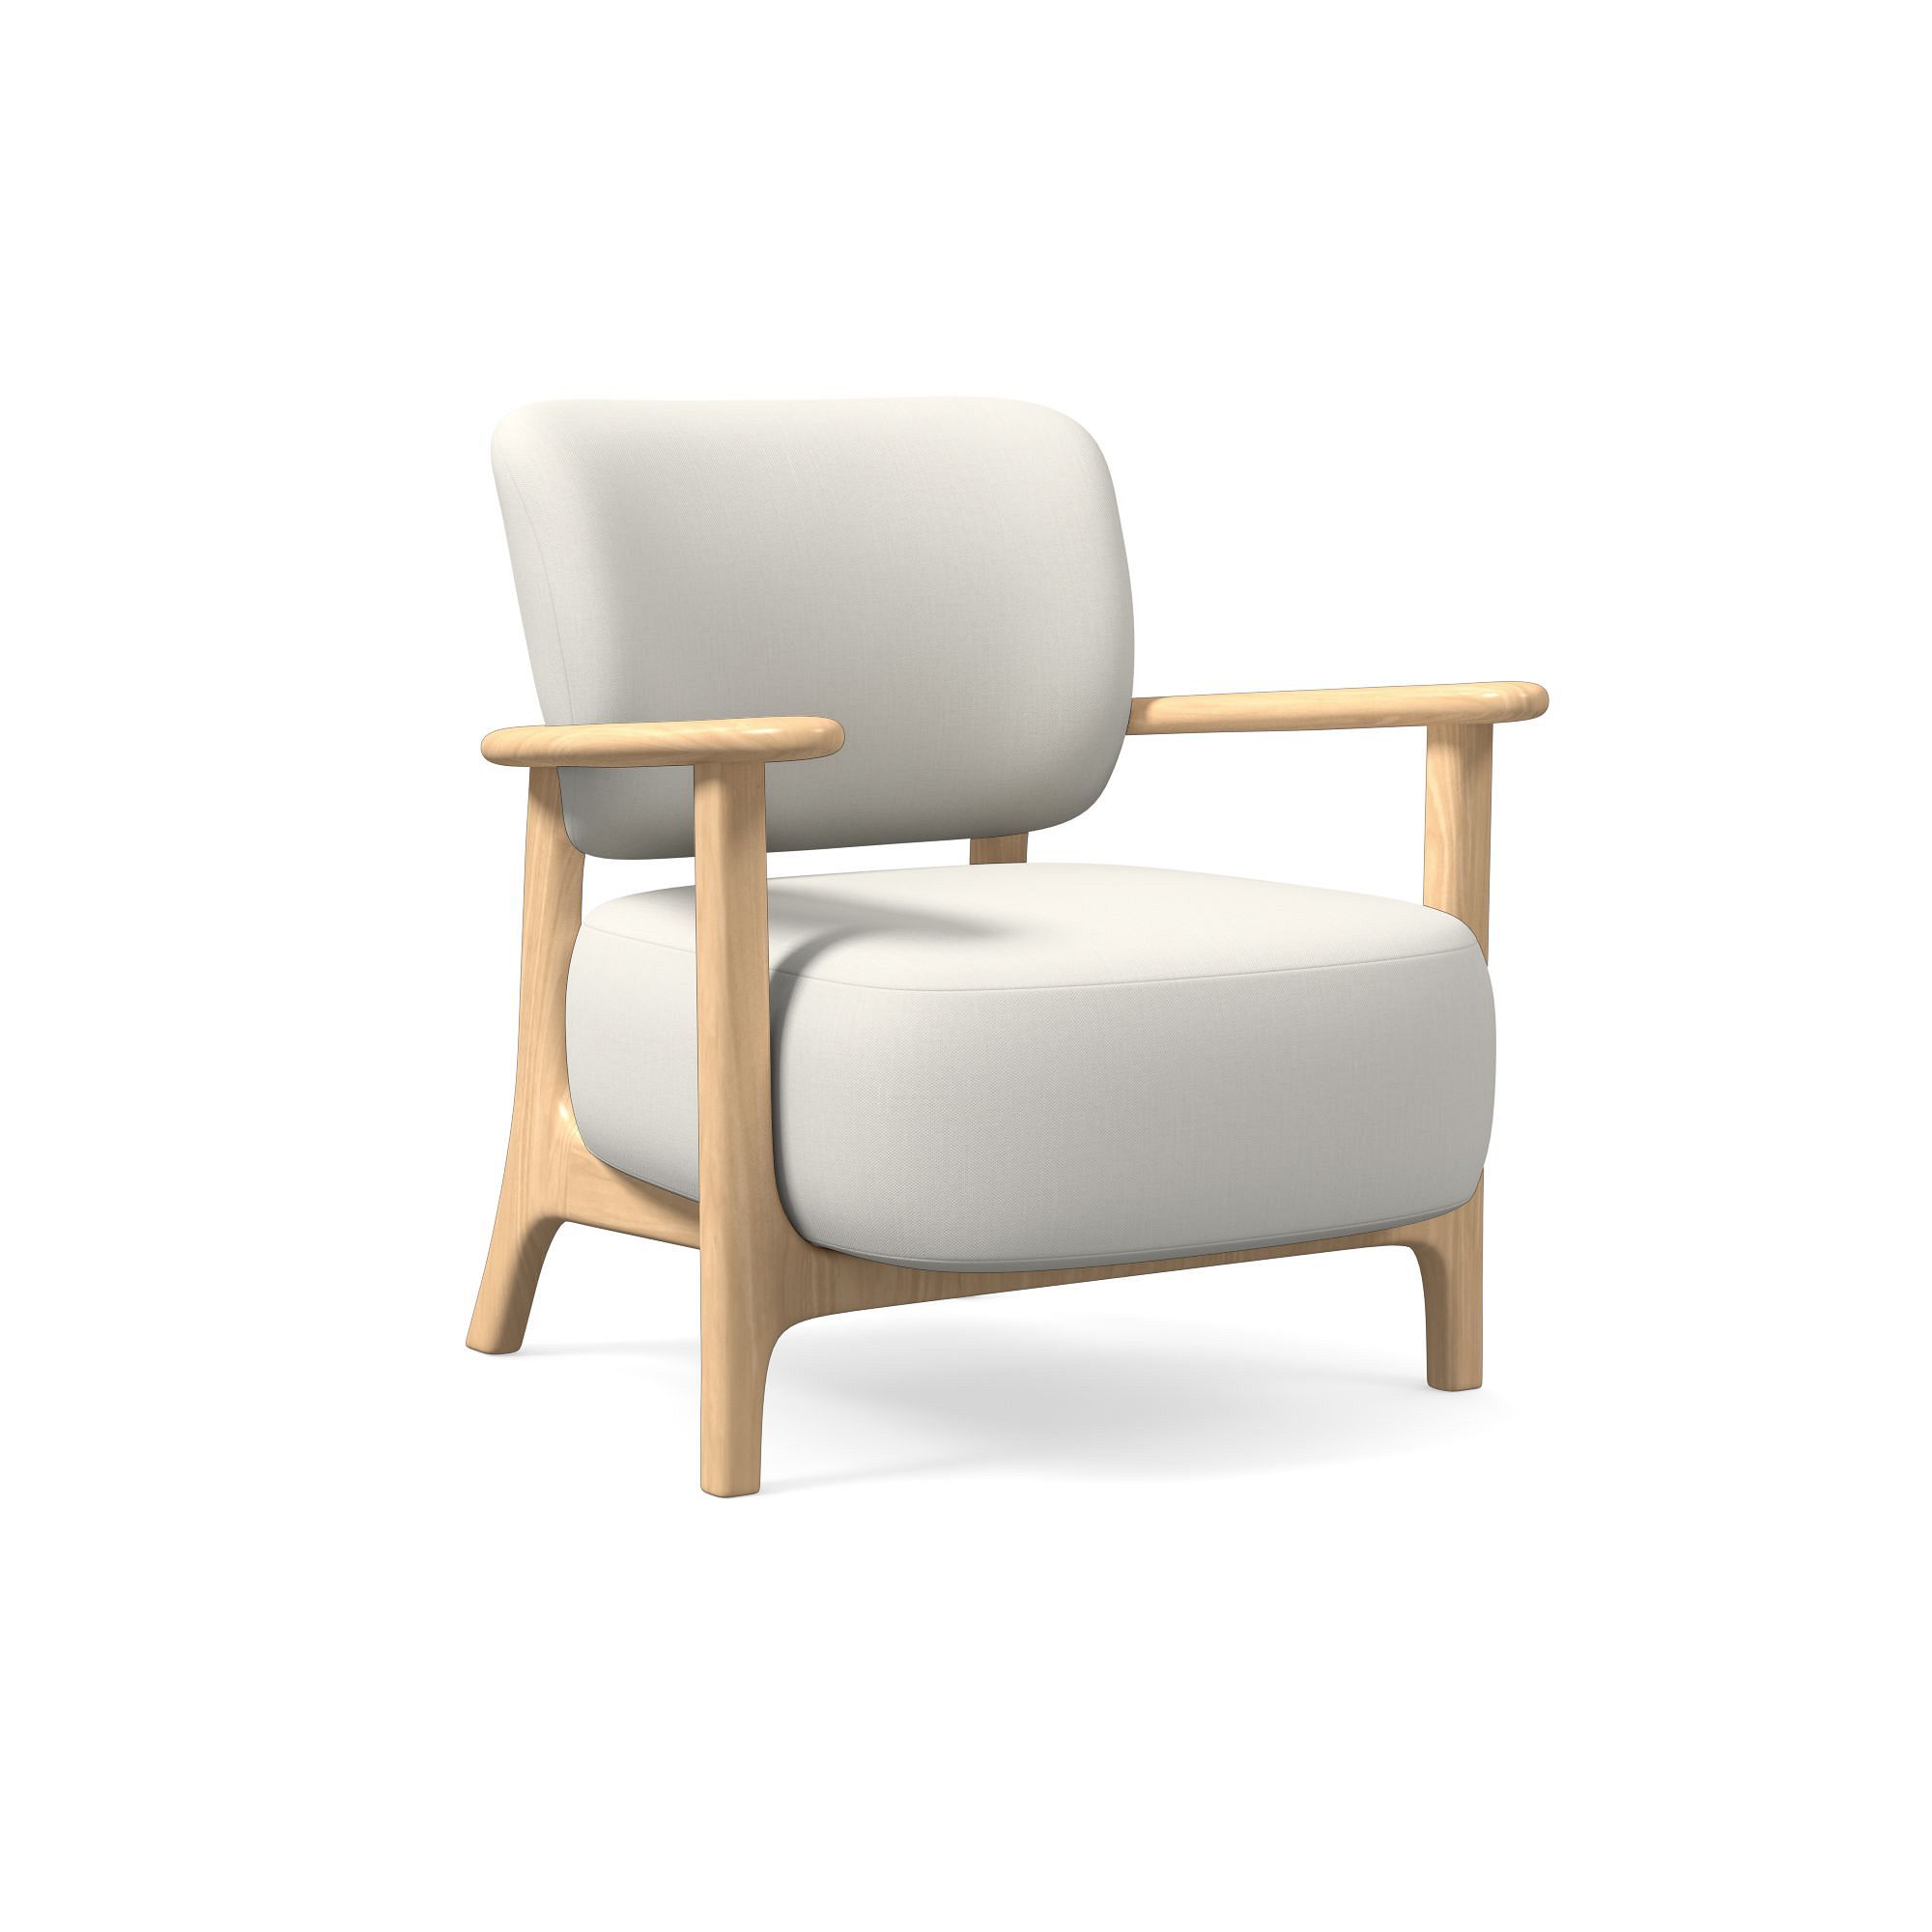 Sylvan Show Wood Chair | West Elm